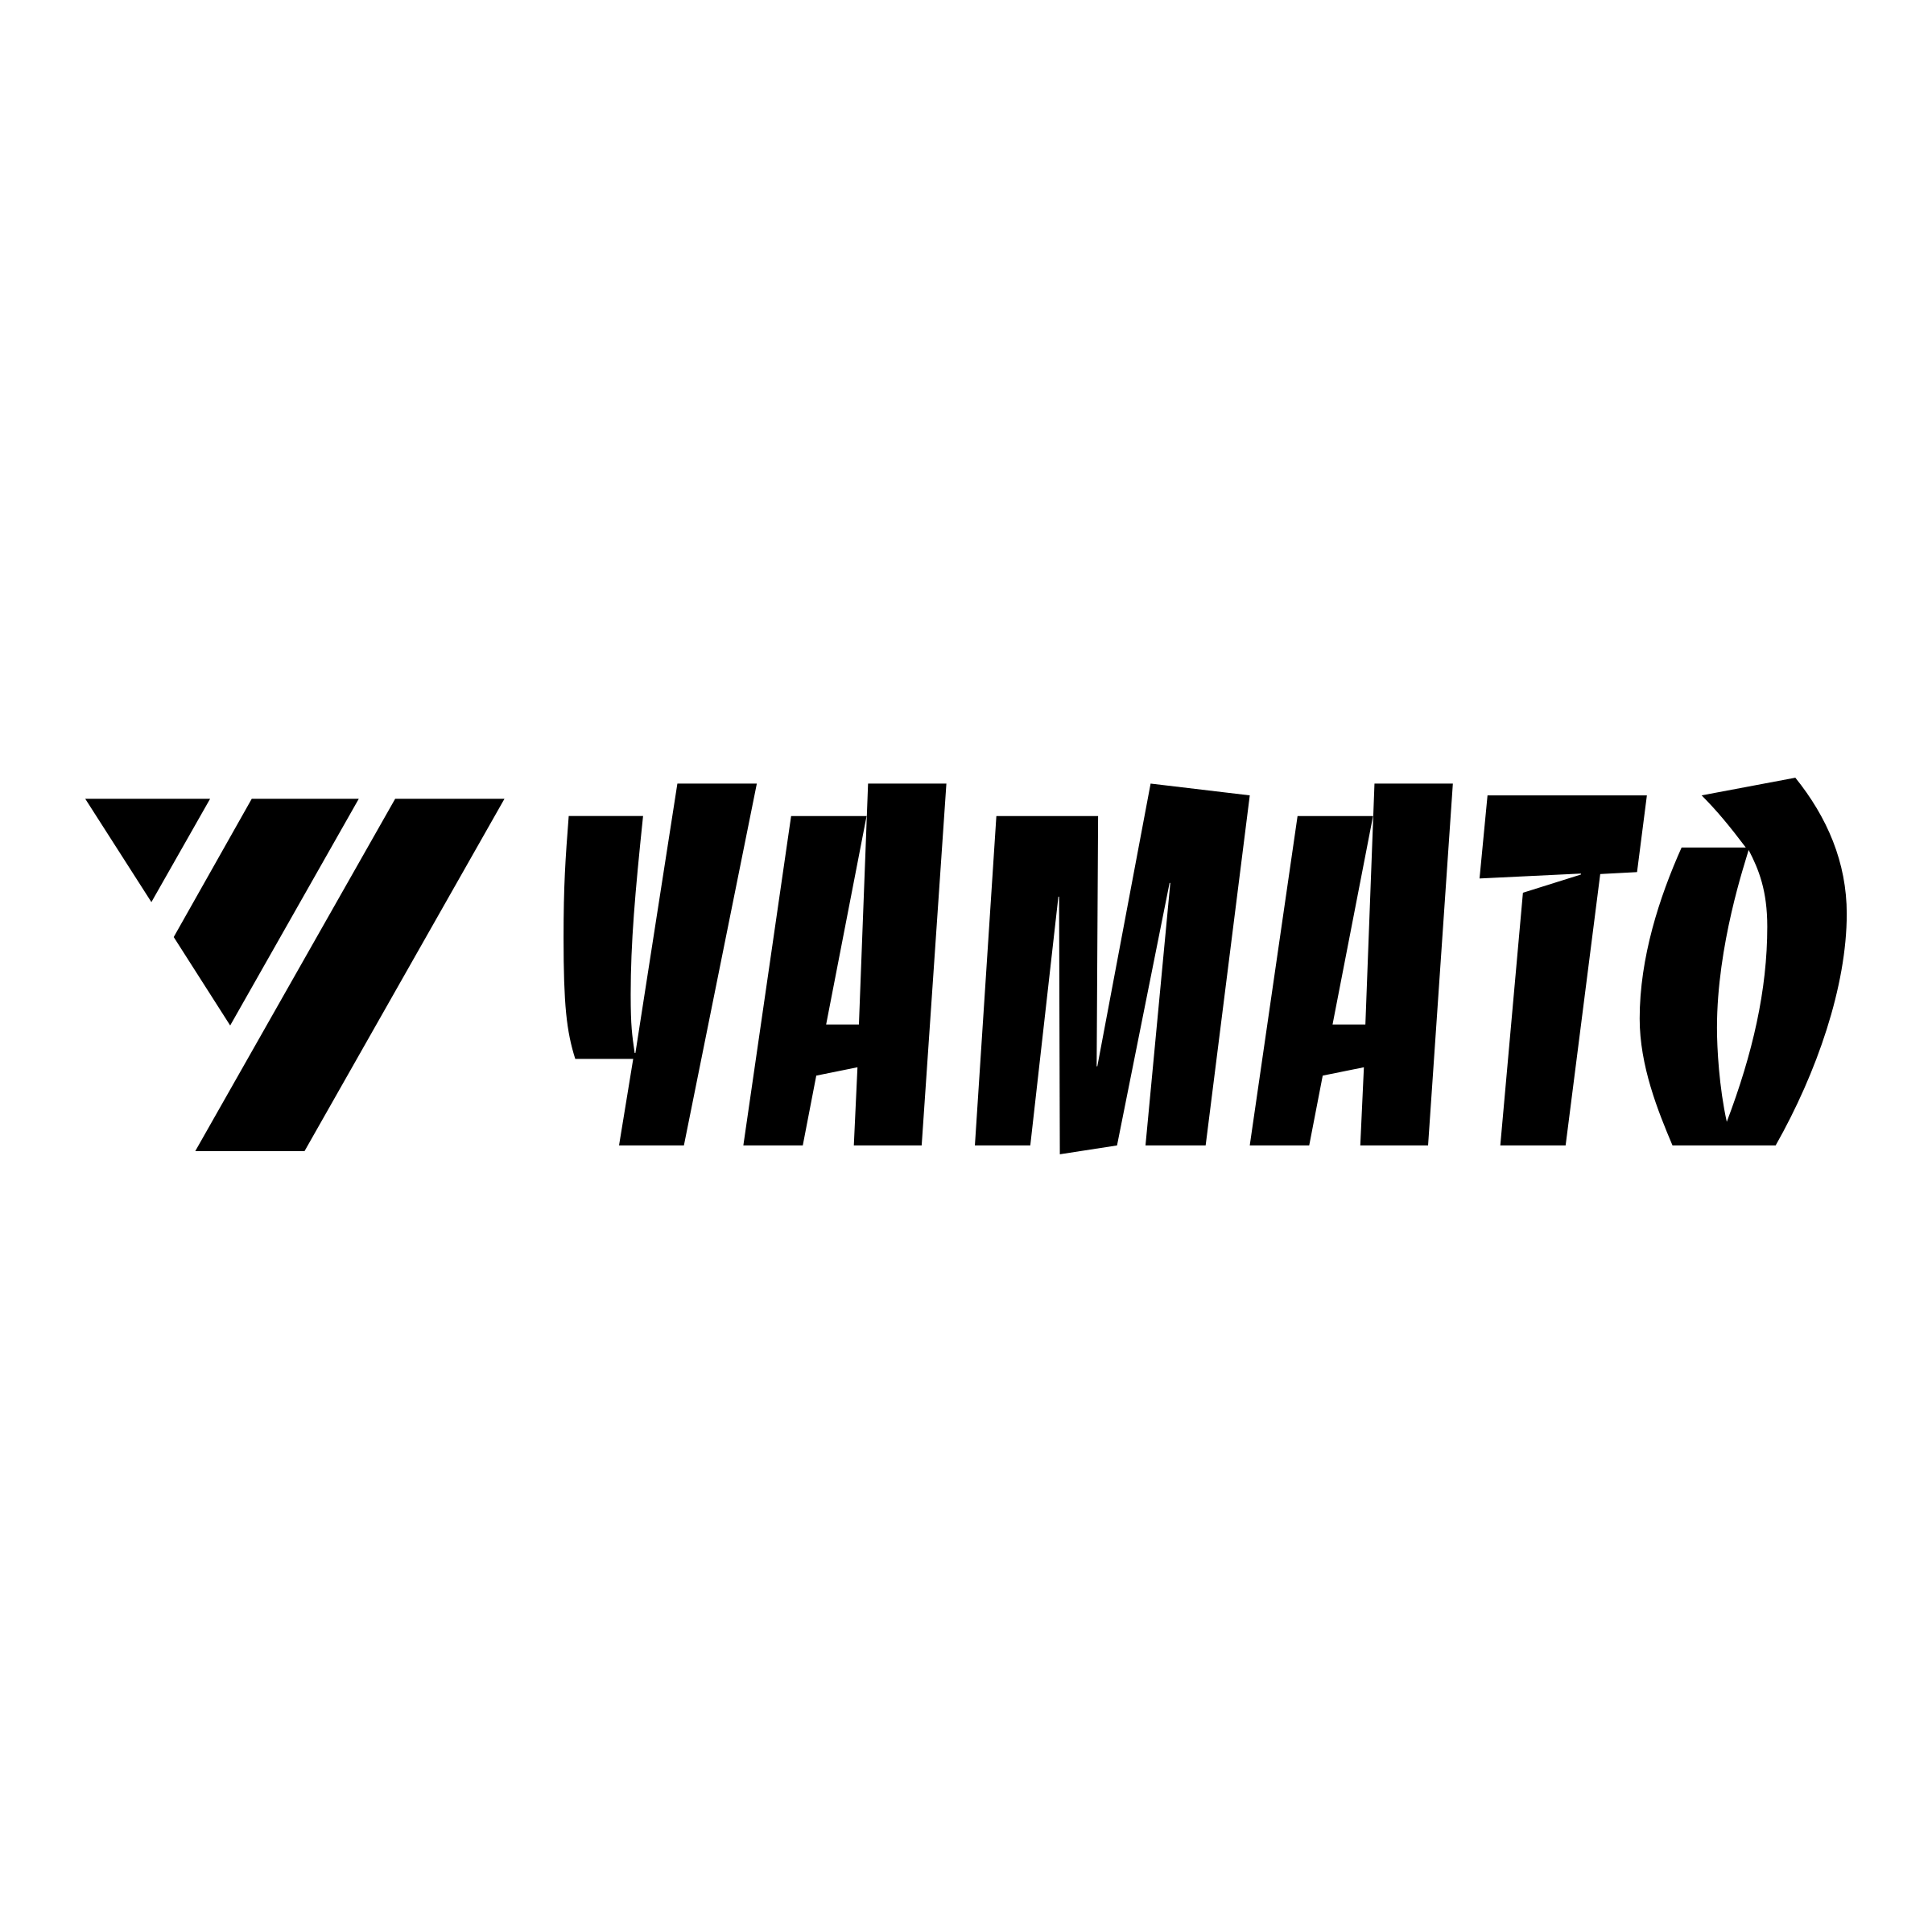 Yamato Logo - Yamato Logo PNG Transparent & SVG Vector - Freebie Supply